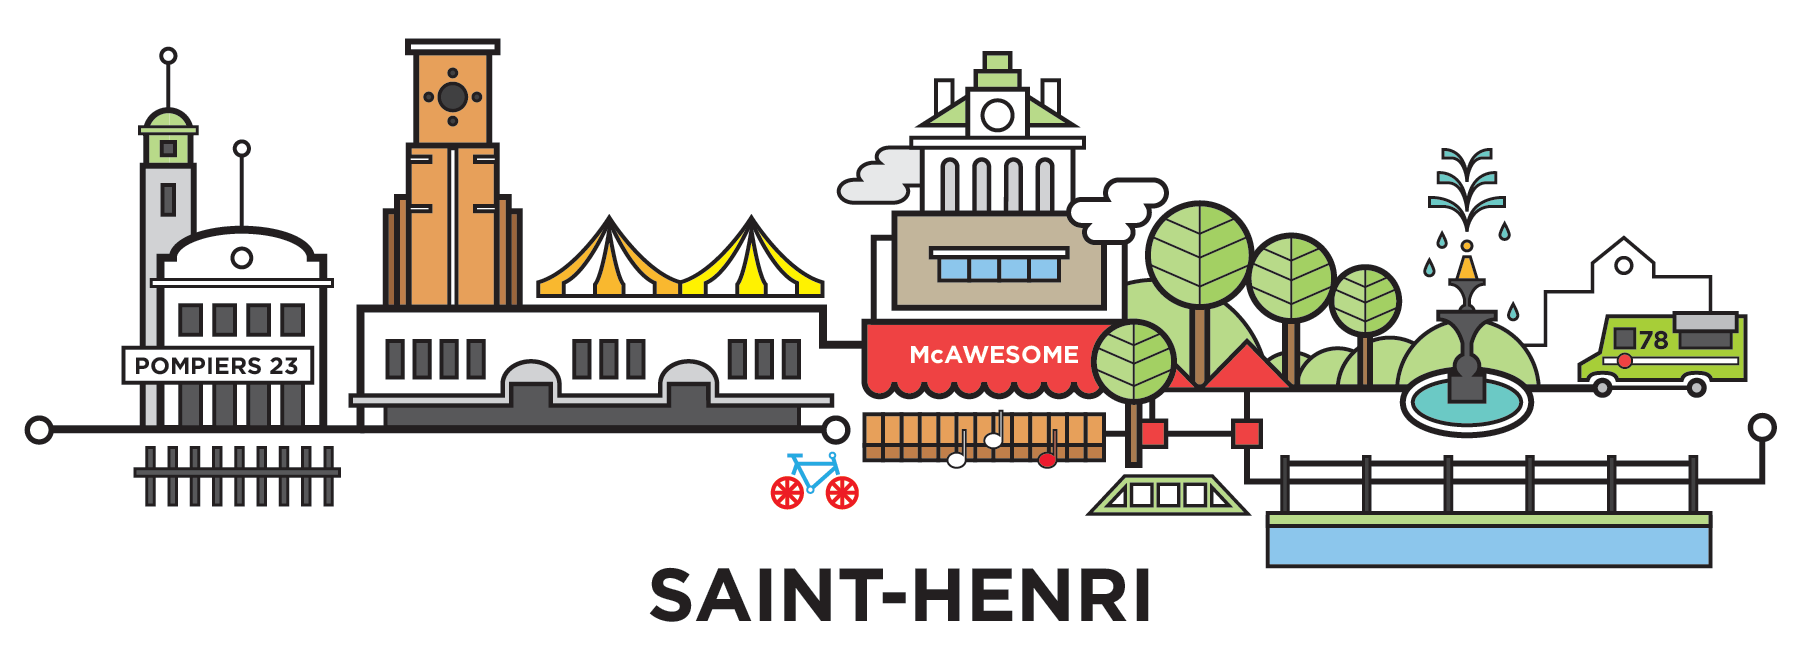 mtl-saint-henri-cityline-illustration-by-loogart